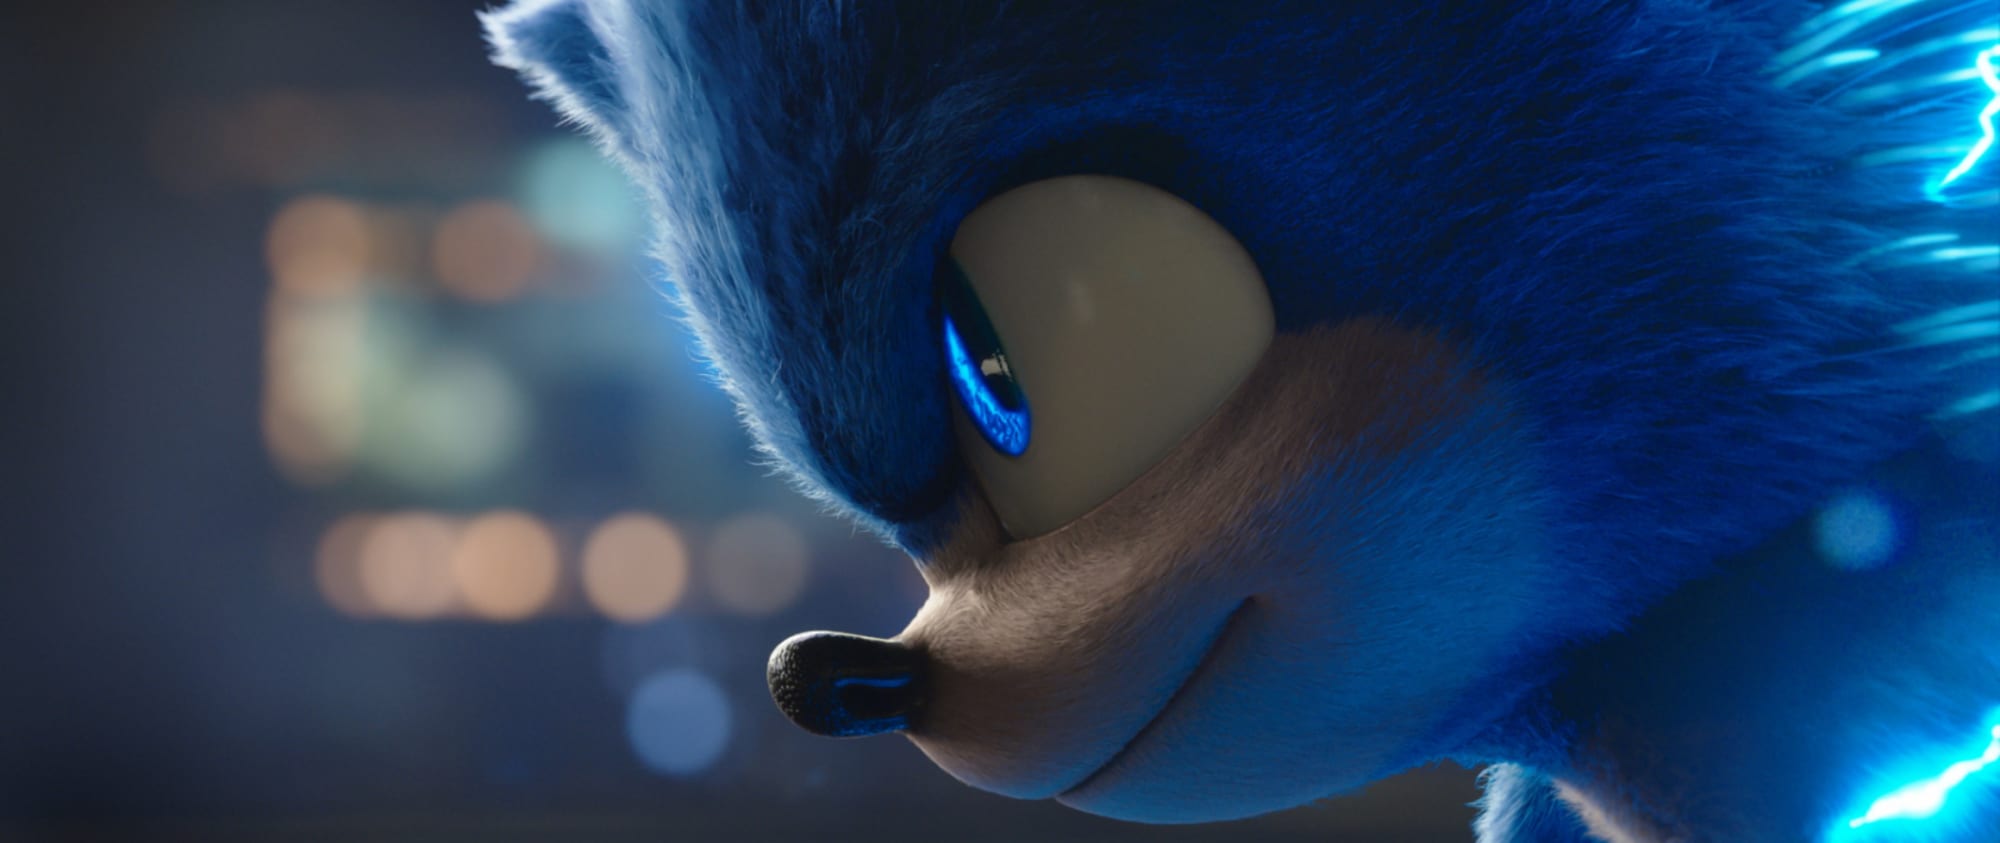 Sonic 2 in netflix is coming soon